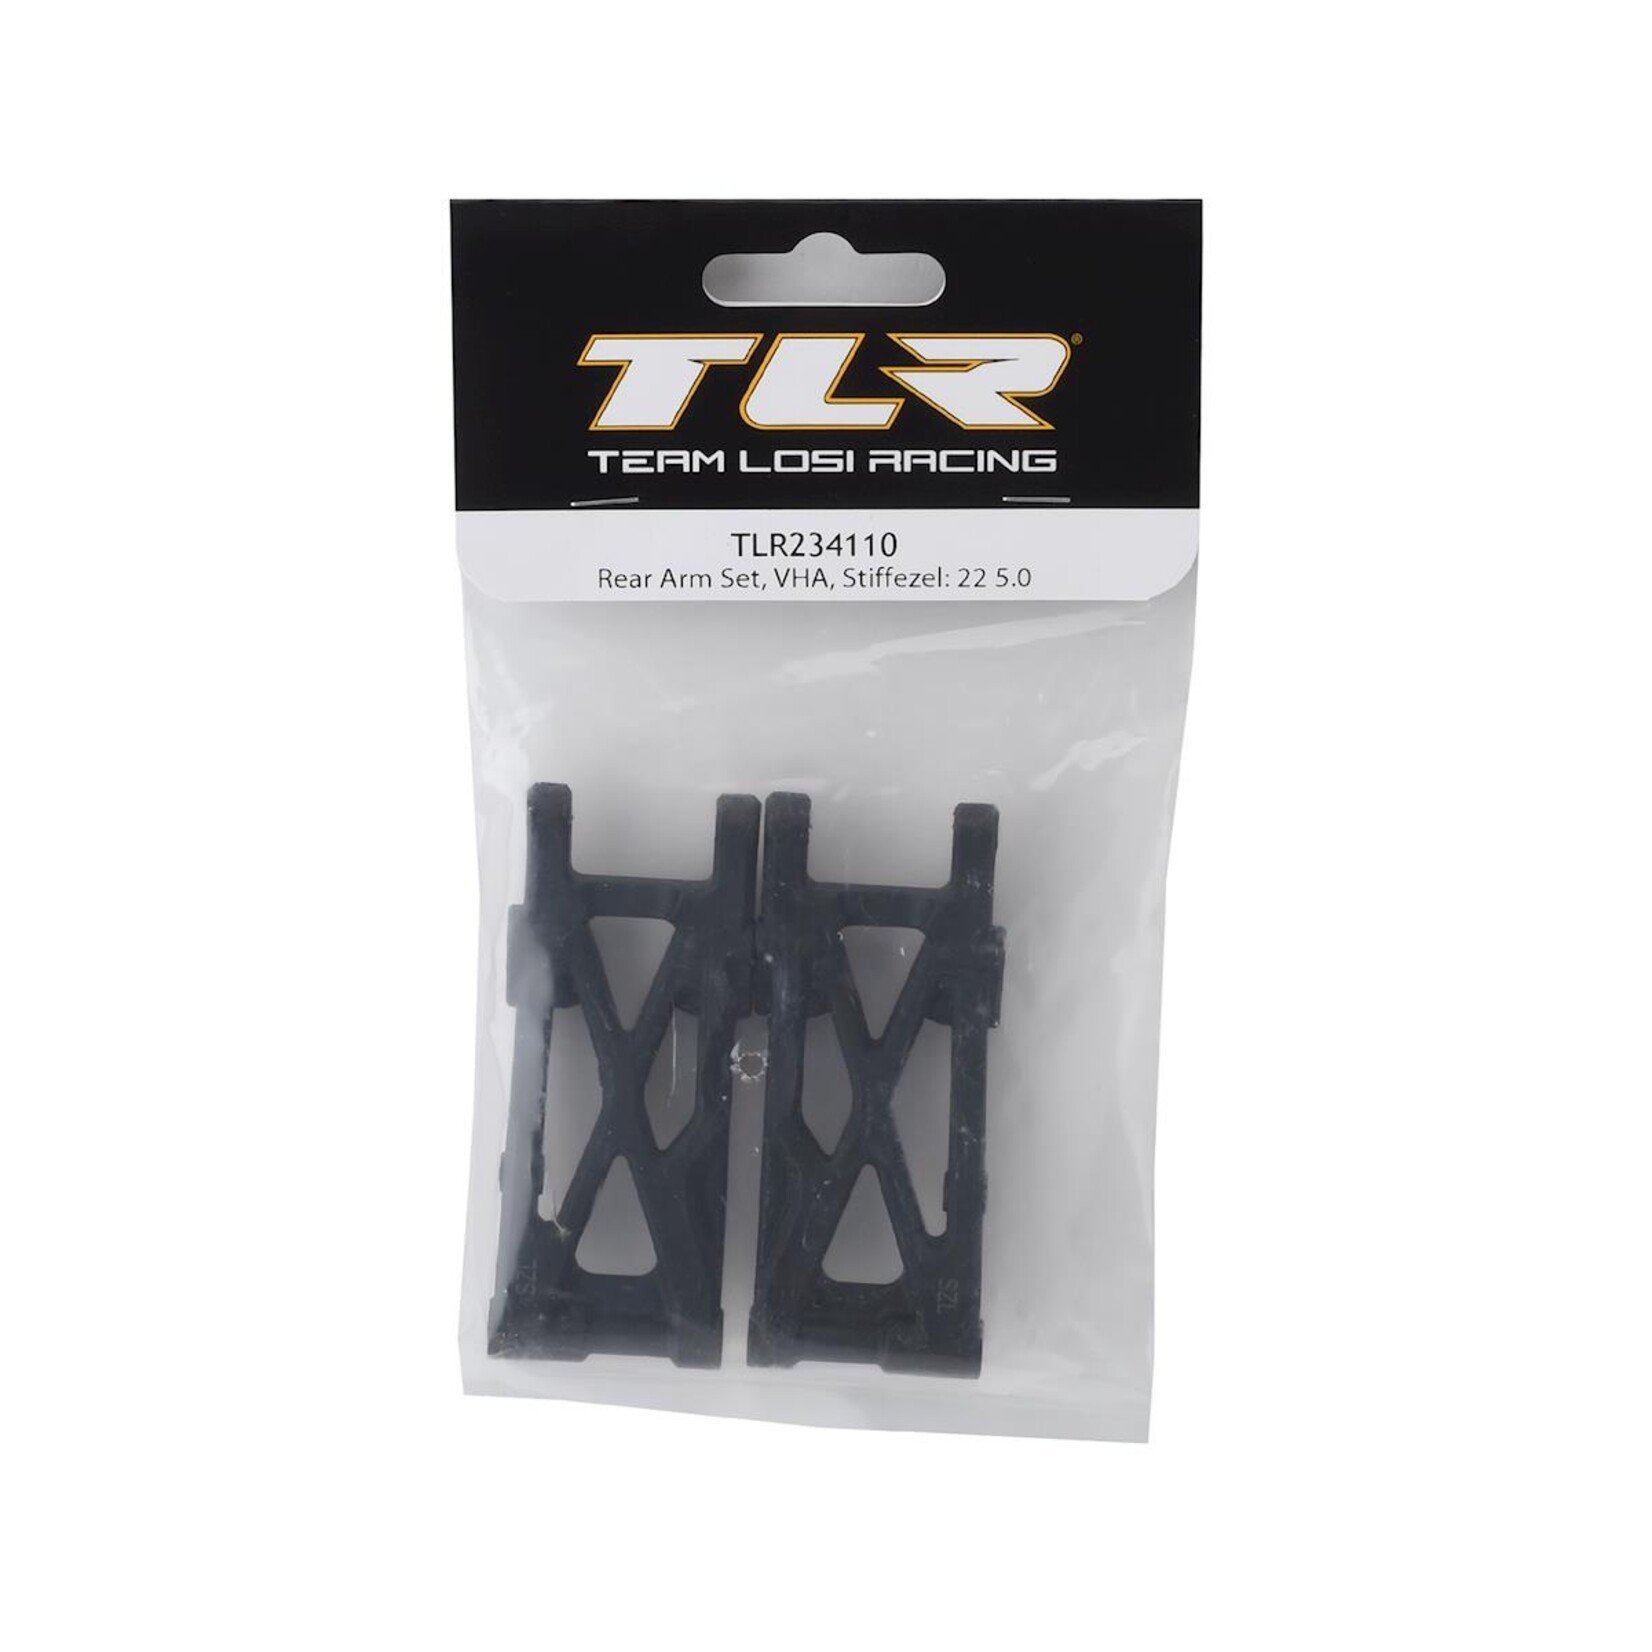 TLR Team Losi Racing 22 5.0 VHA Stiffezel Rear Arm Set #TLR234110